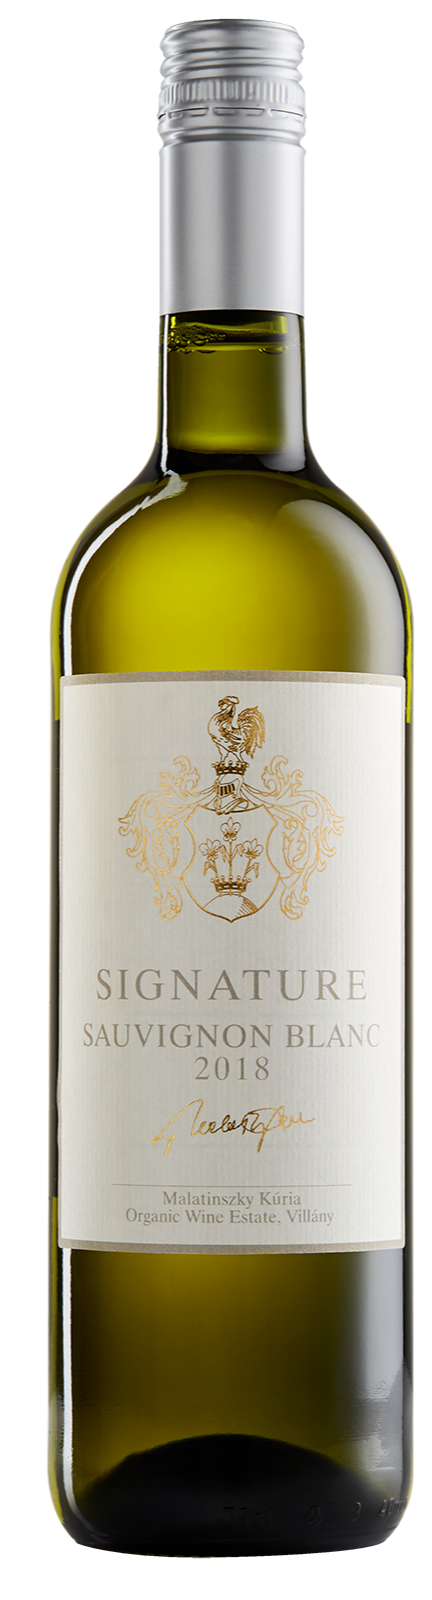 Signature Sauvignon Blanc bio/vegan, Bor - Malatinszky Kúria Organic Wine Estate